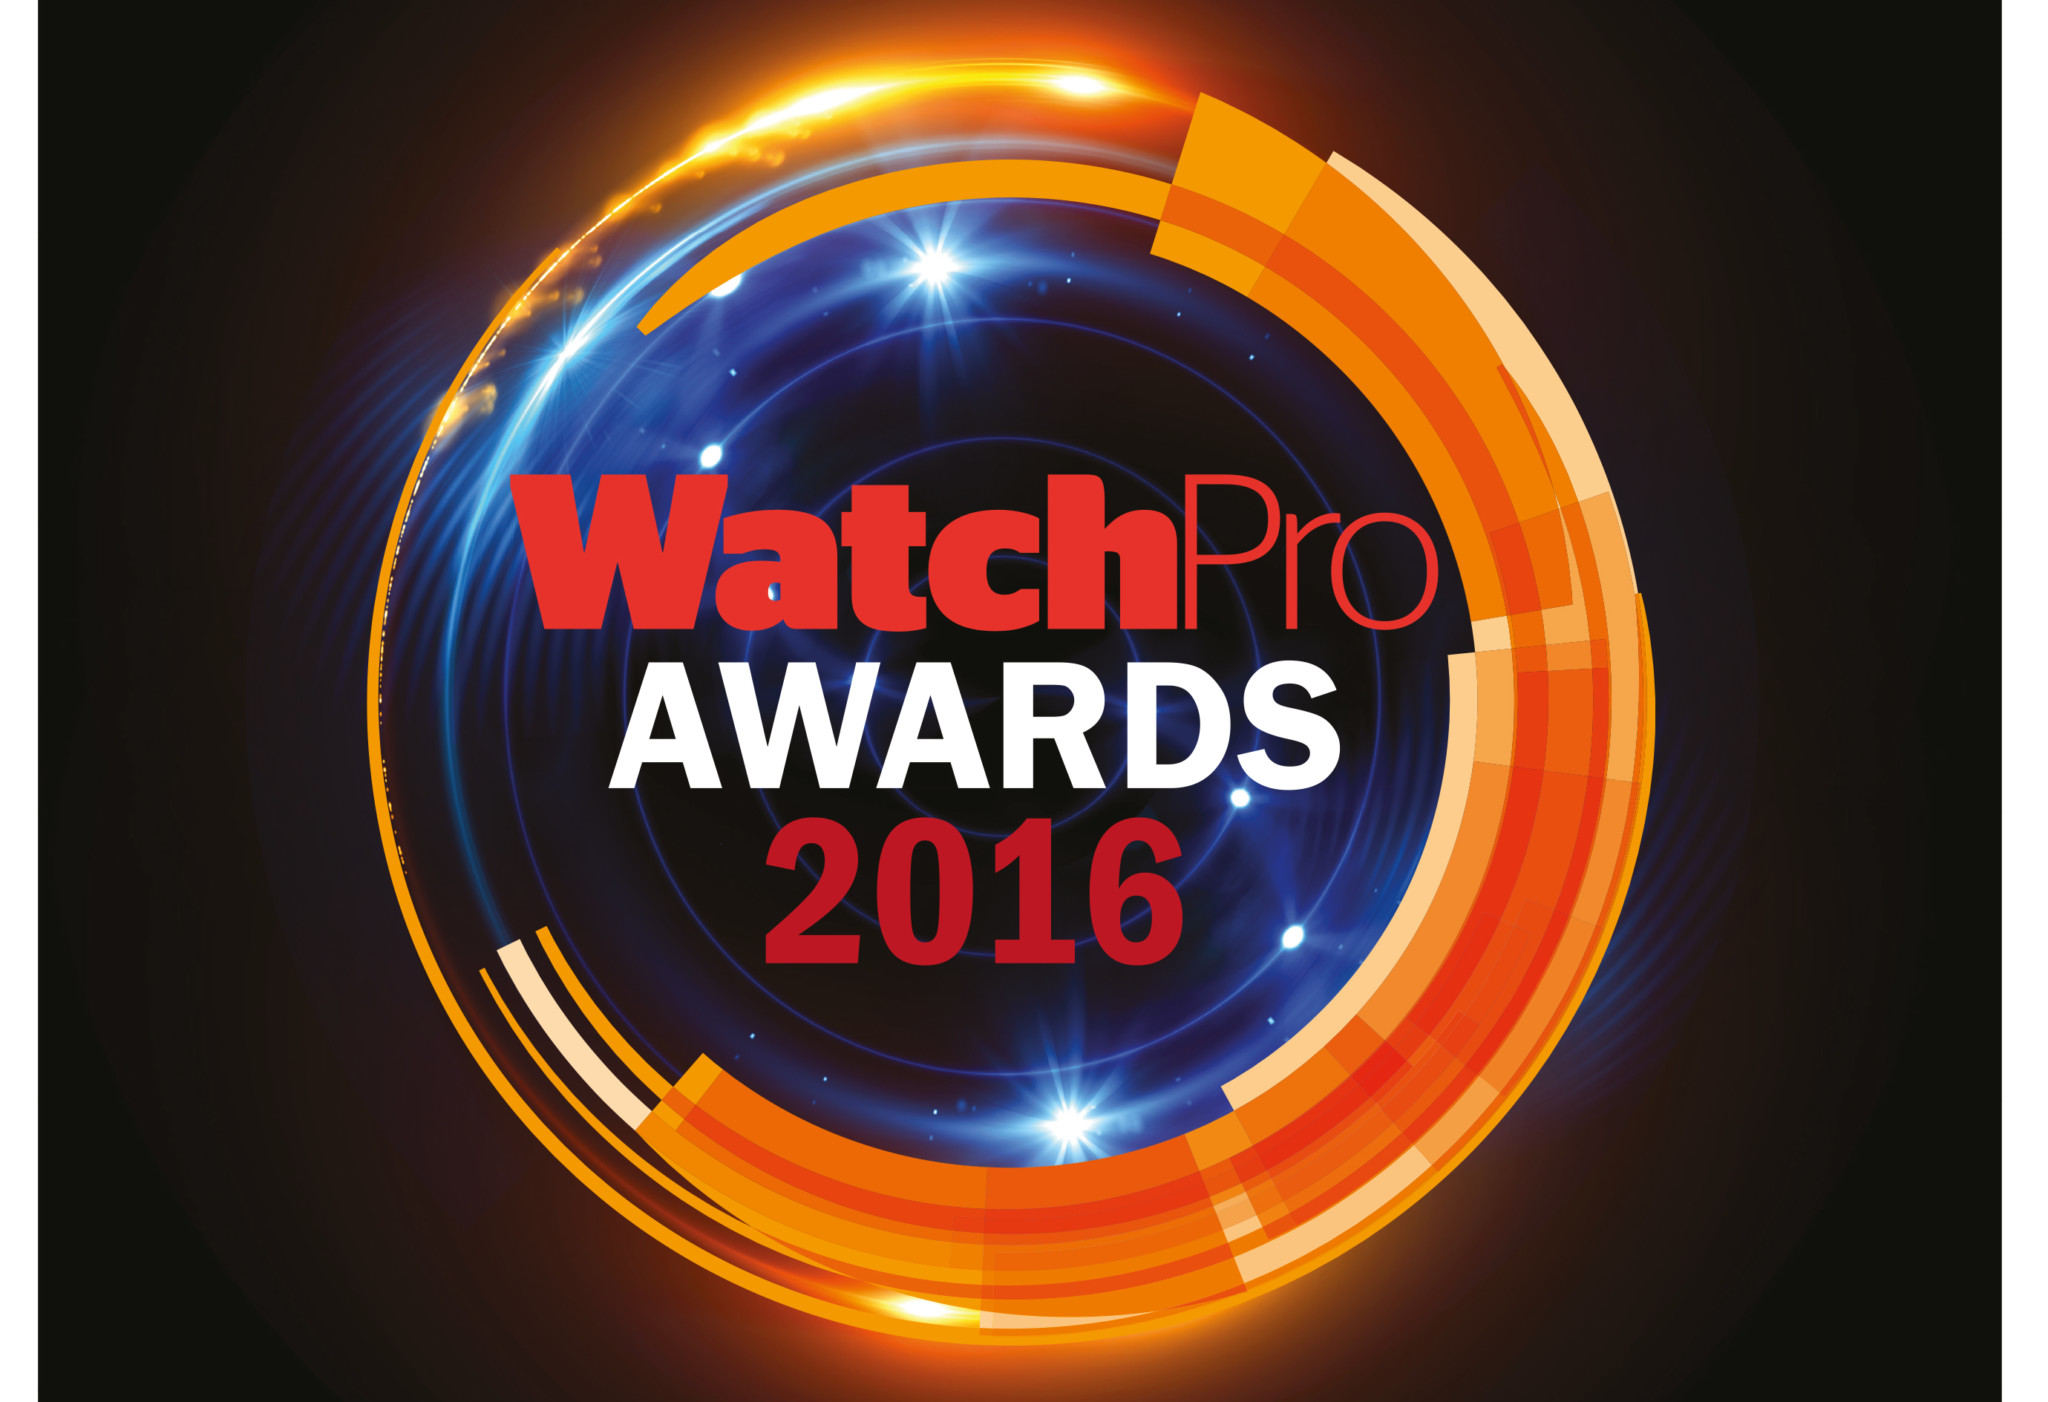 WatchPro Awards